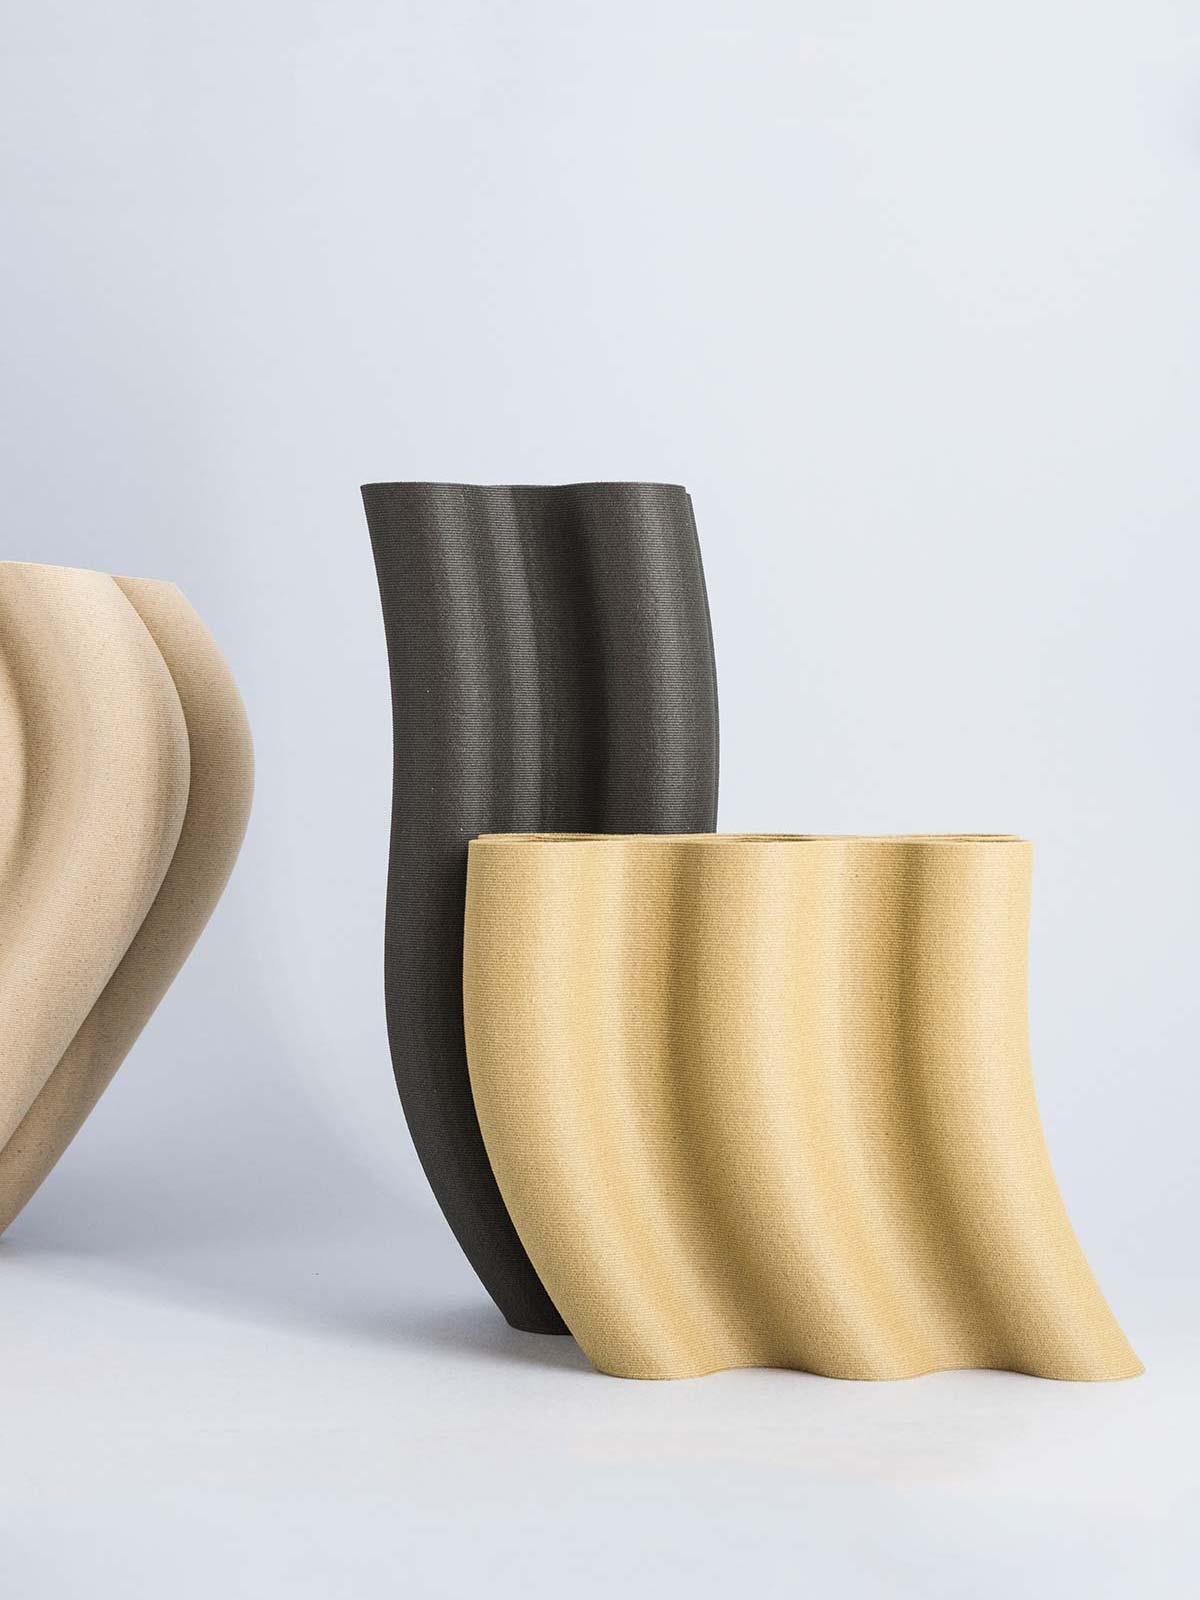 Cells Vase Trio by Index Office - Photo © Jean Baptiste Thiriet